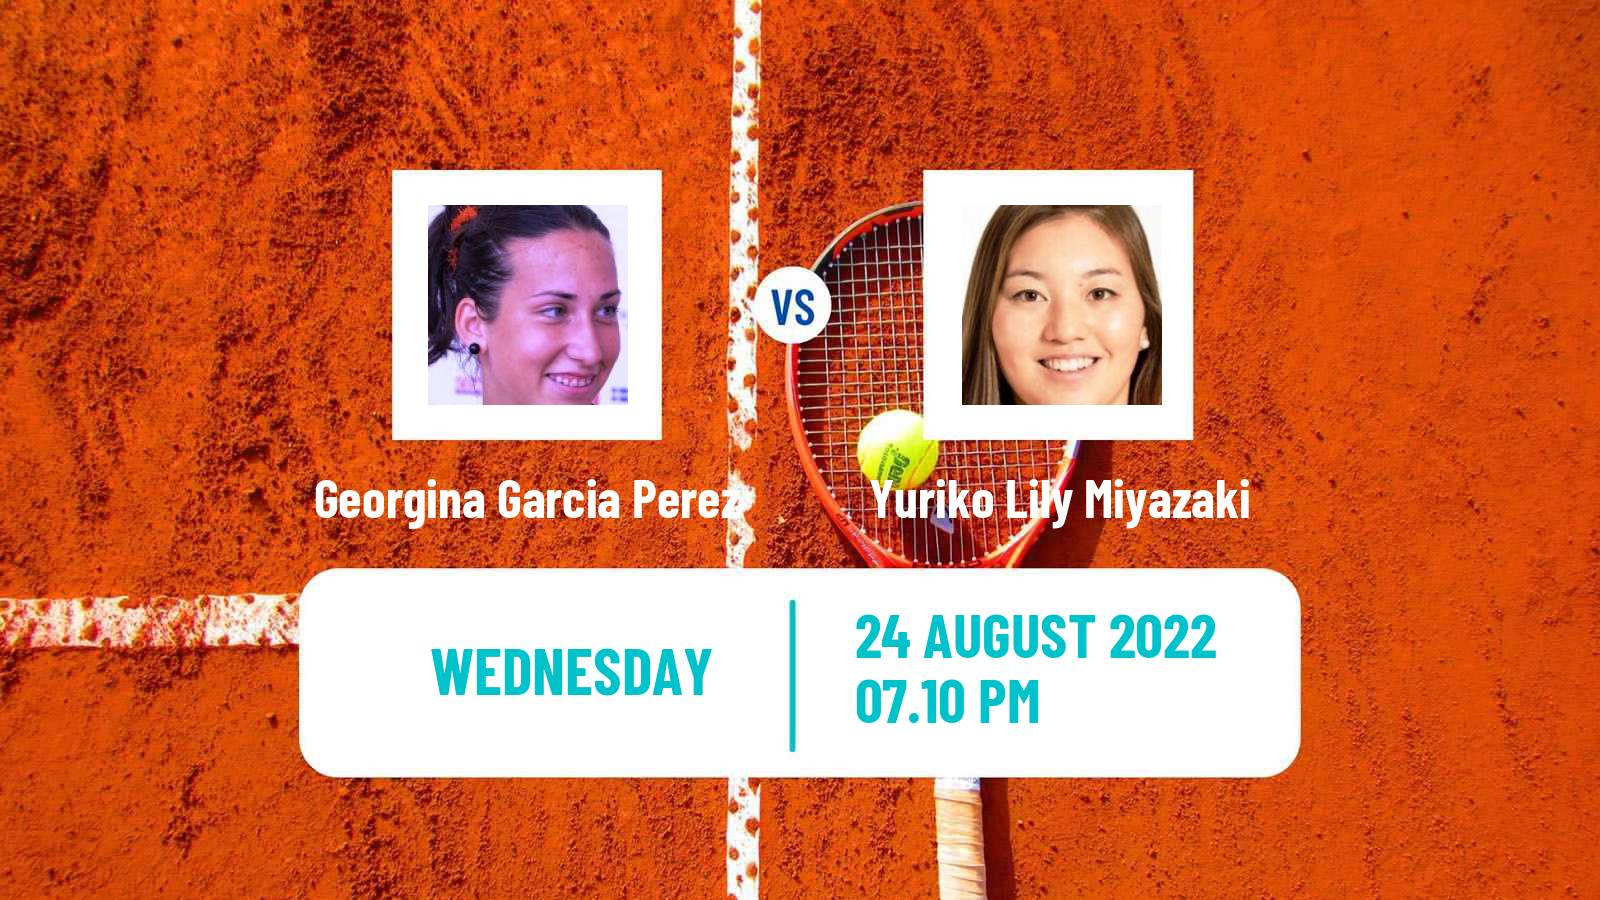 Tennis WTA US Open Georgina Garcia Perez - Yuriko Lily Miyazaki